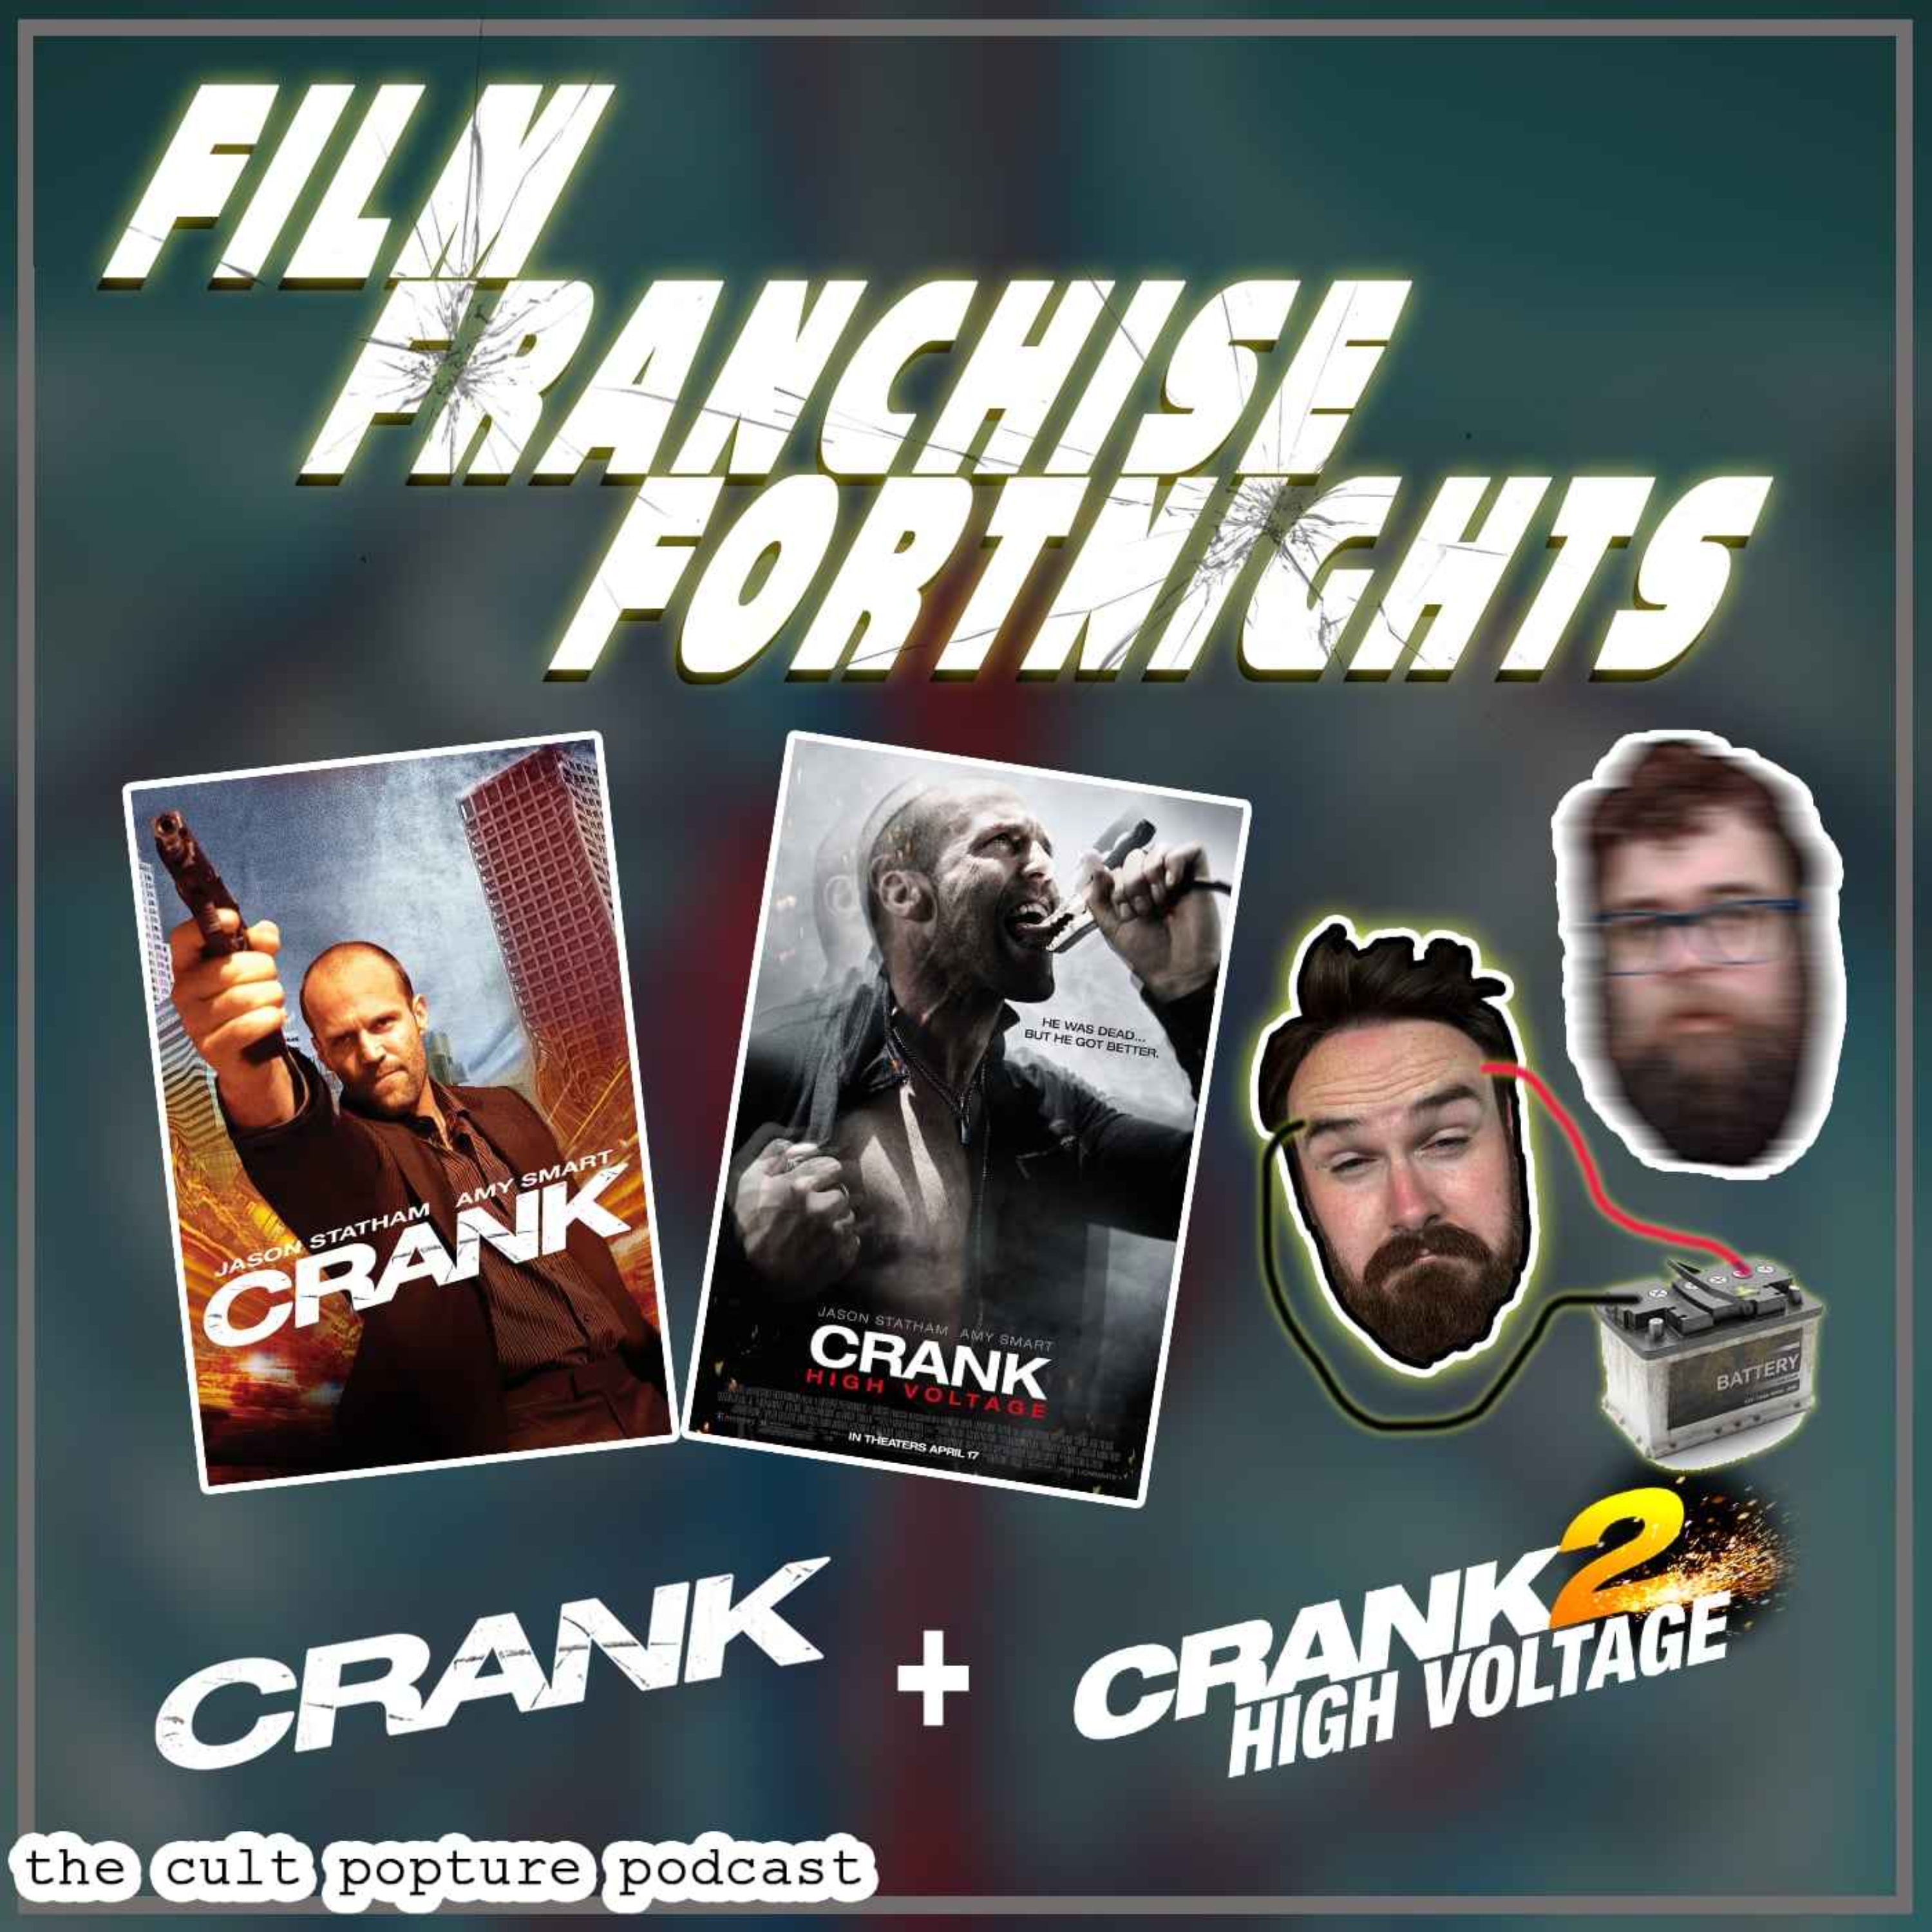 ”Crank” and ”Crank 2: High Voltage” | Film Franchise Fortnights